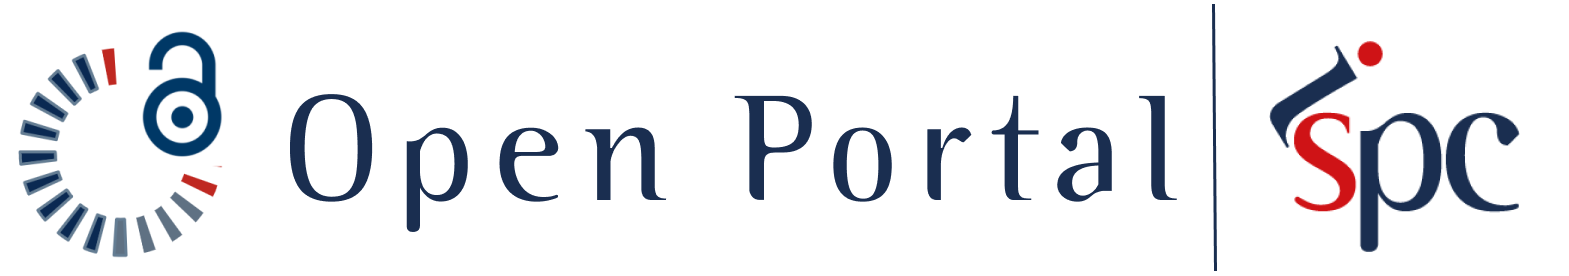 ISPC Logo